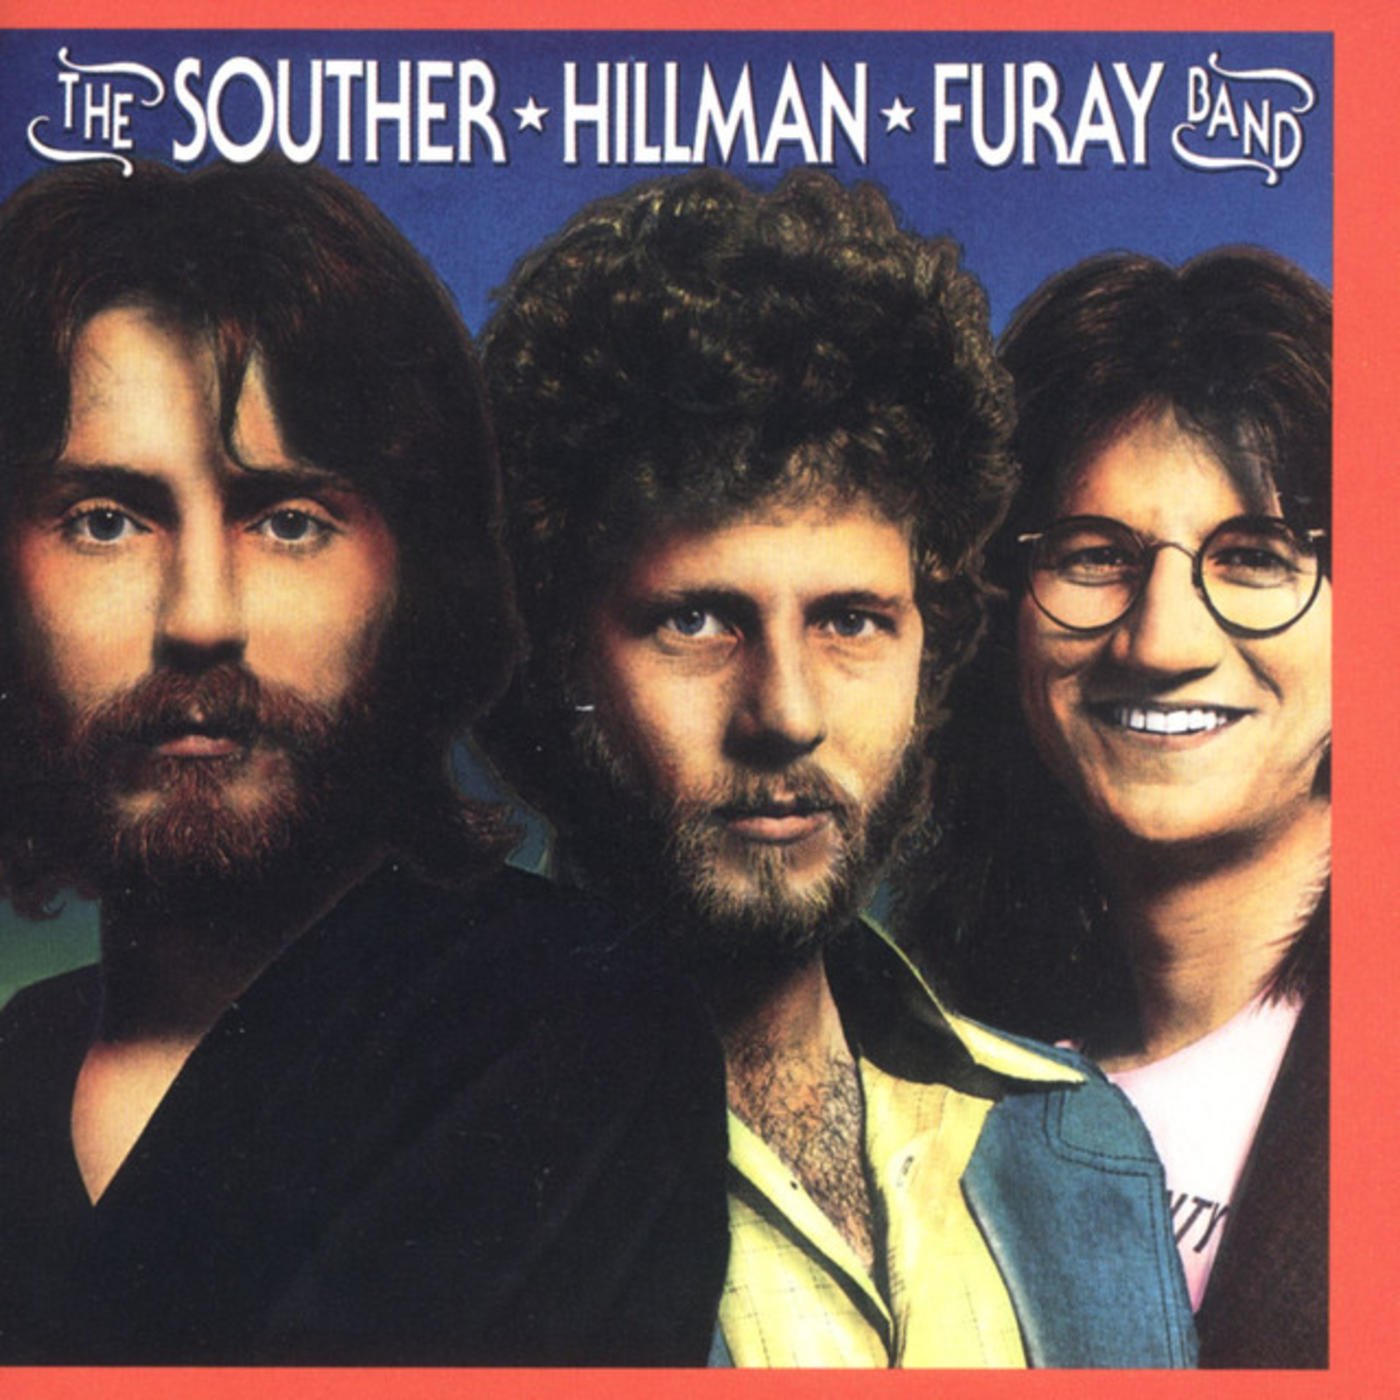 Spotlighting the Sotther-Hillman-Furay Band